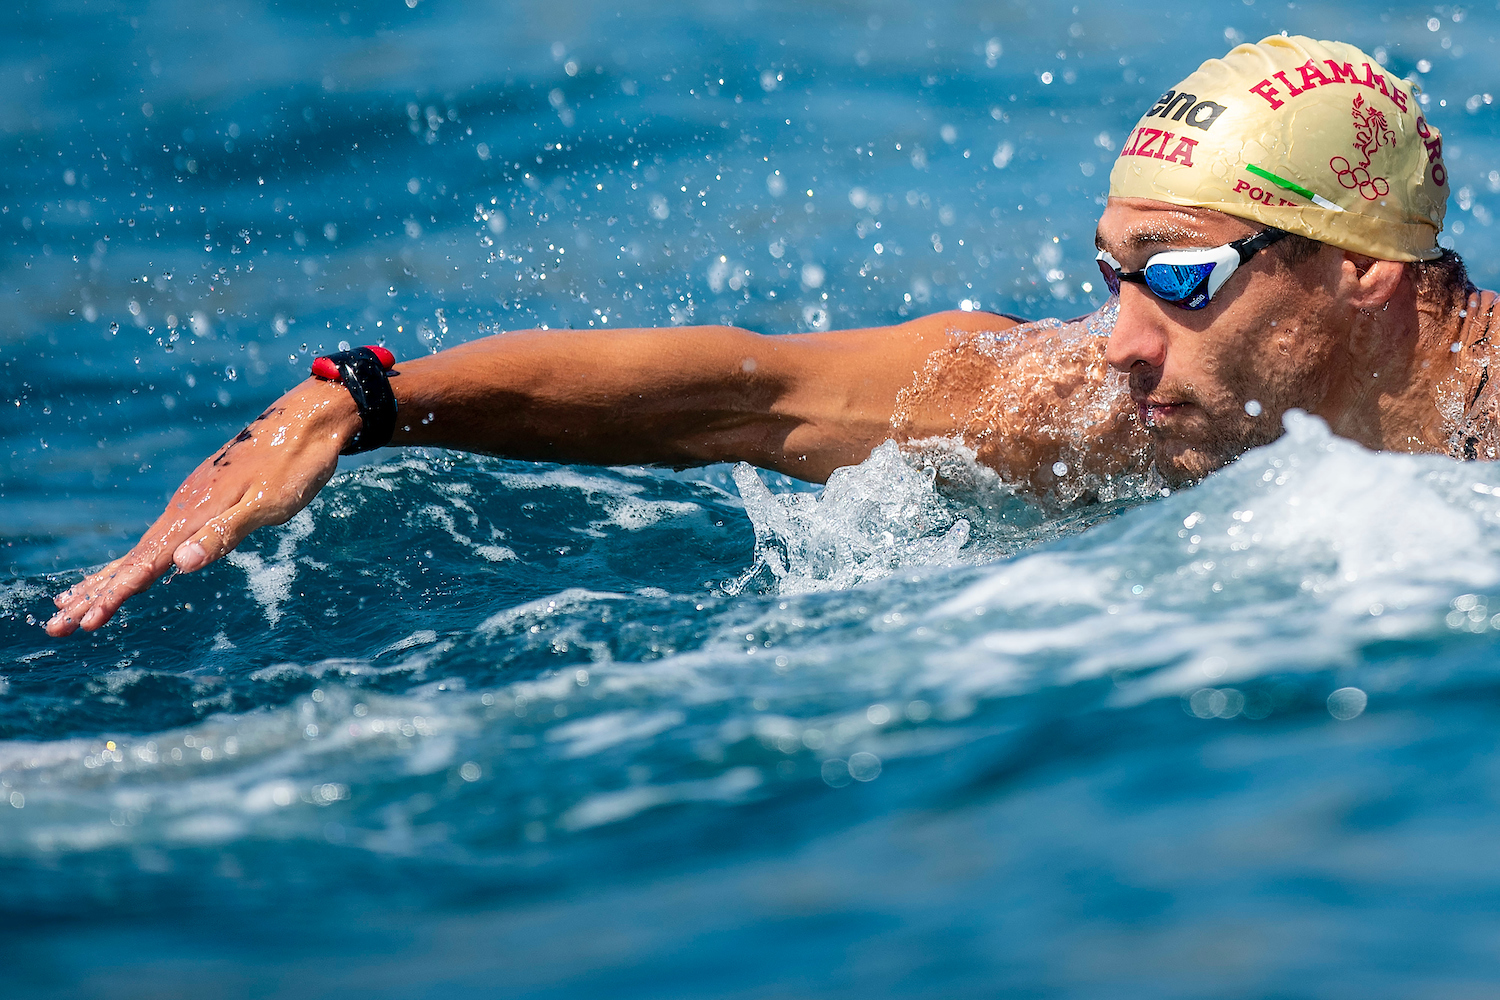 Mario Sanzullo, 10km nuoto, tokio 2020